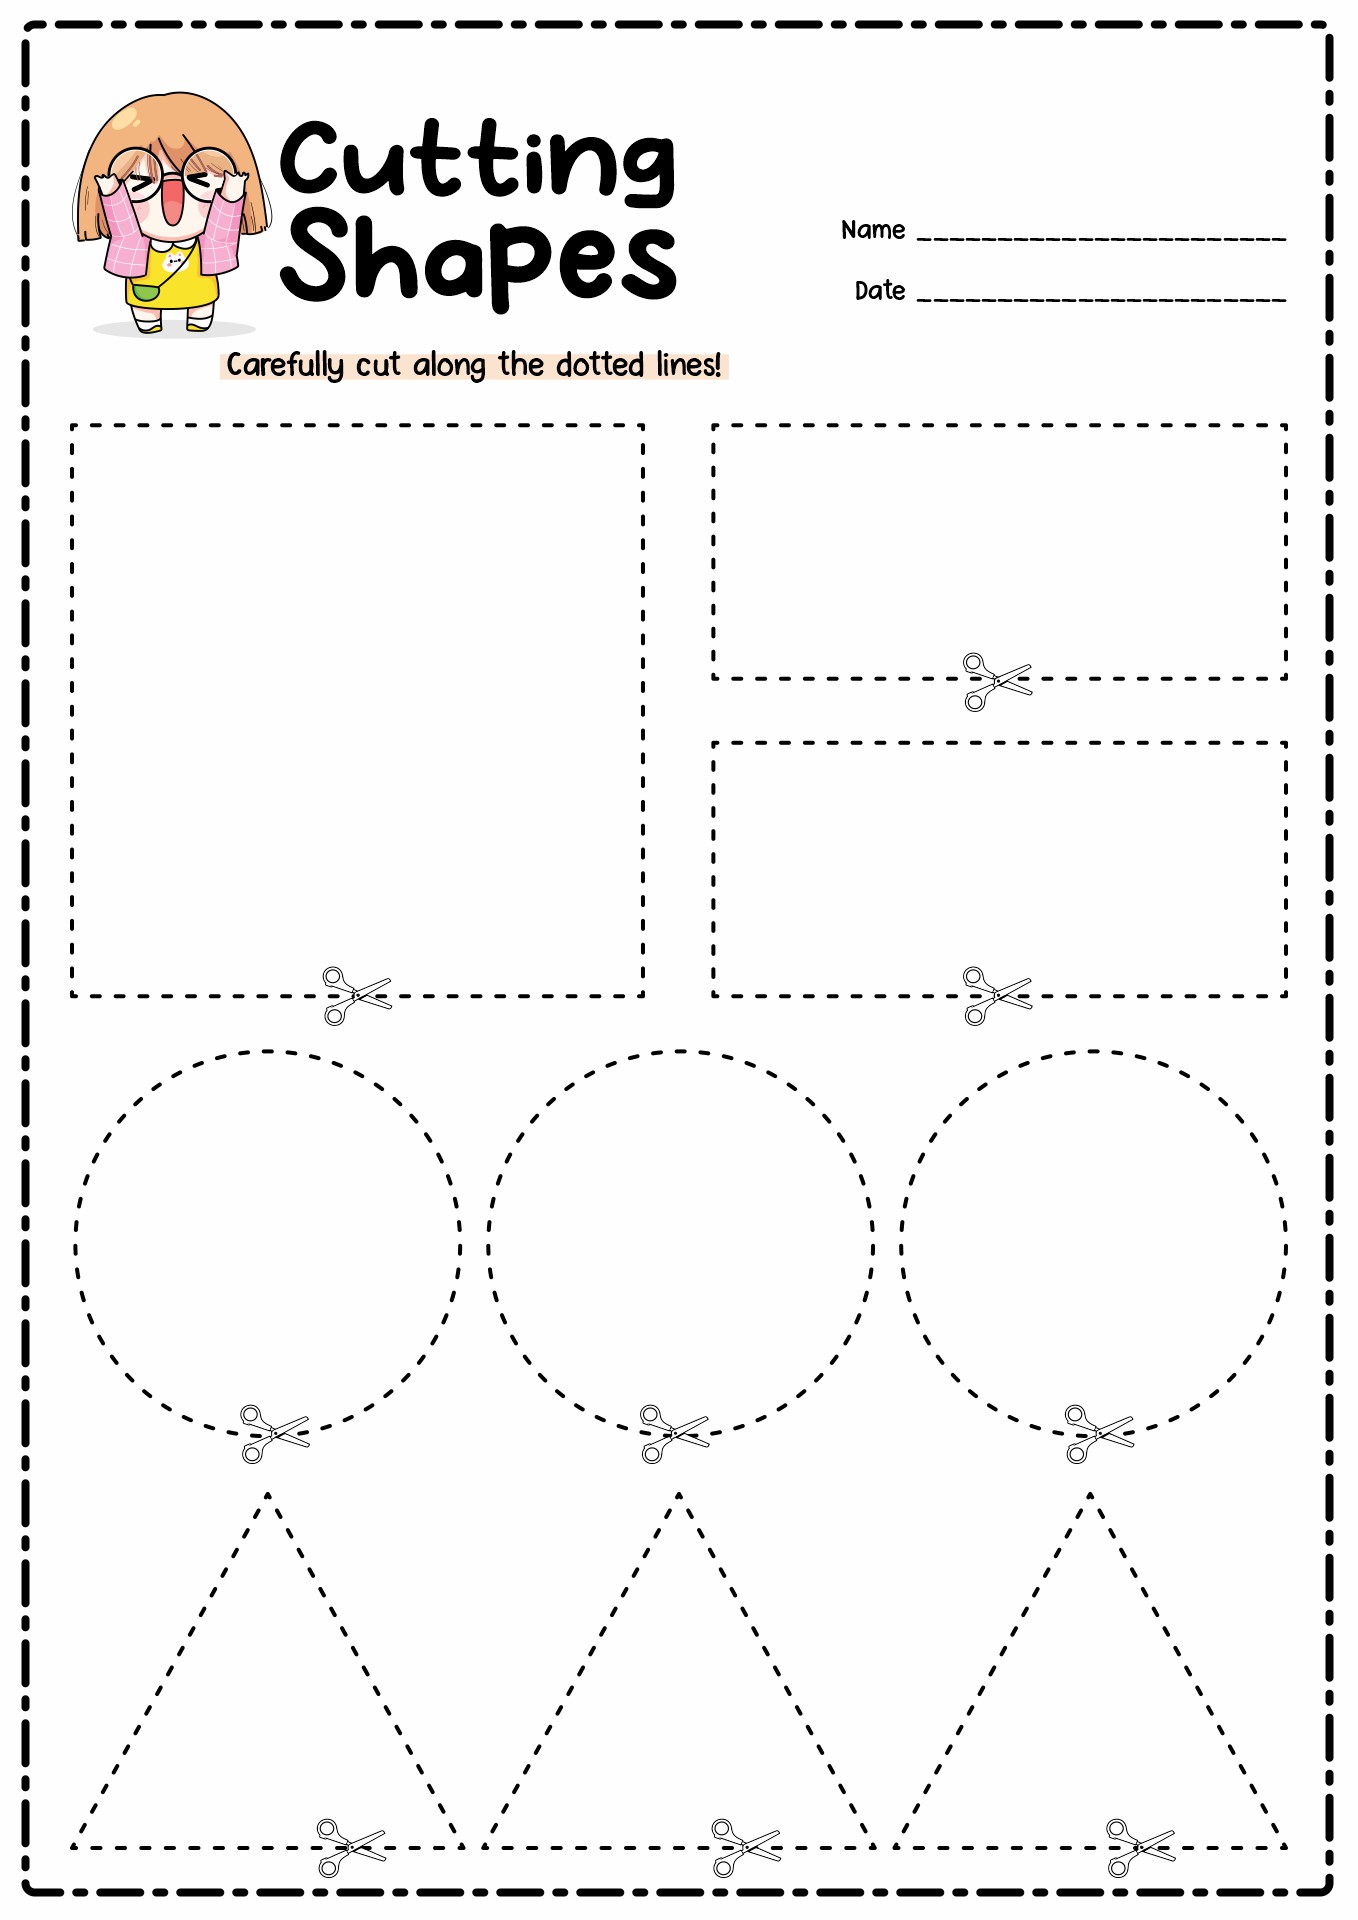 Cutting Shapes For Kids Printable - Free Printable Worksheet